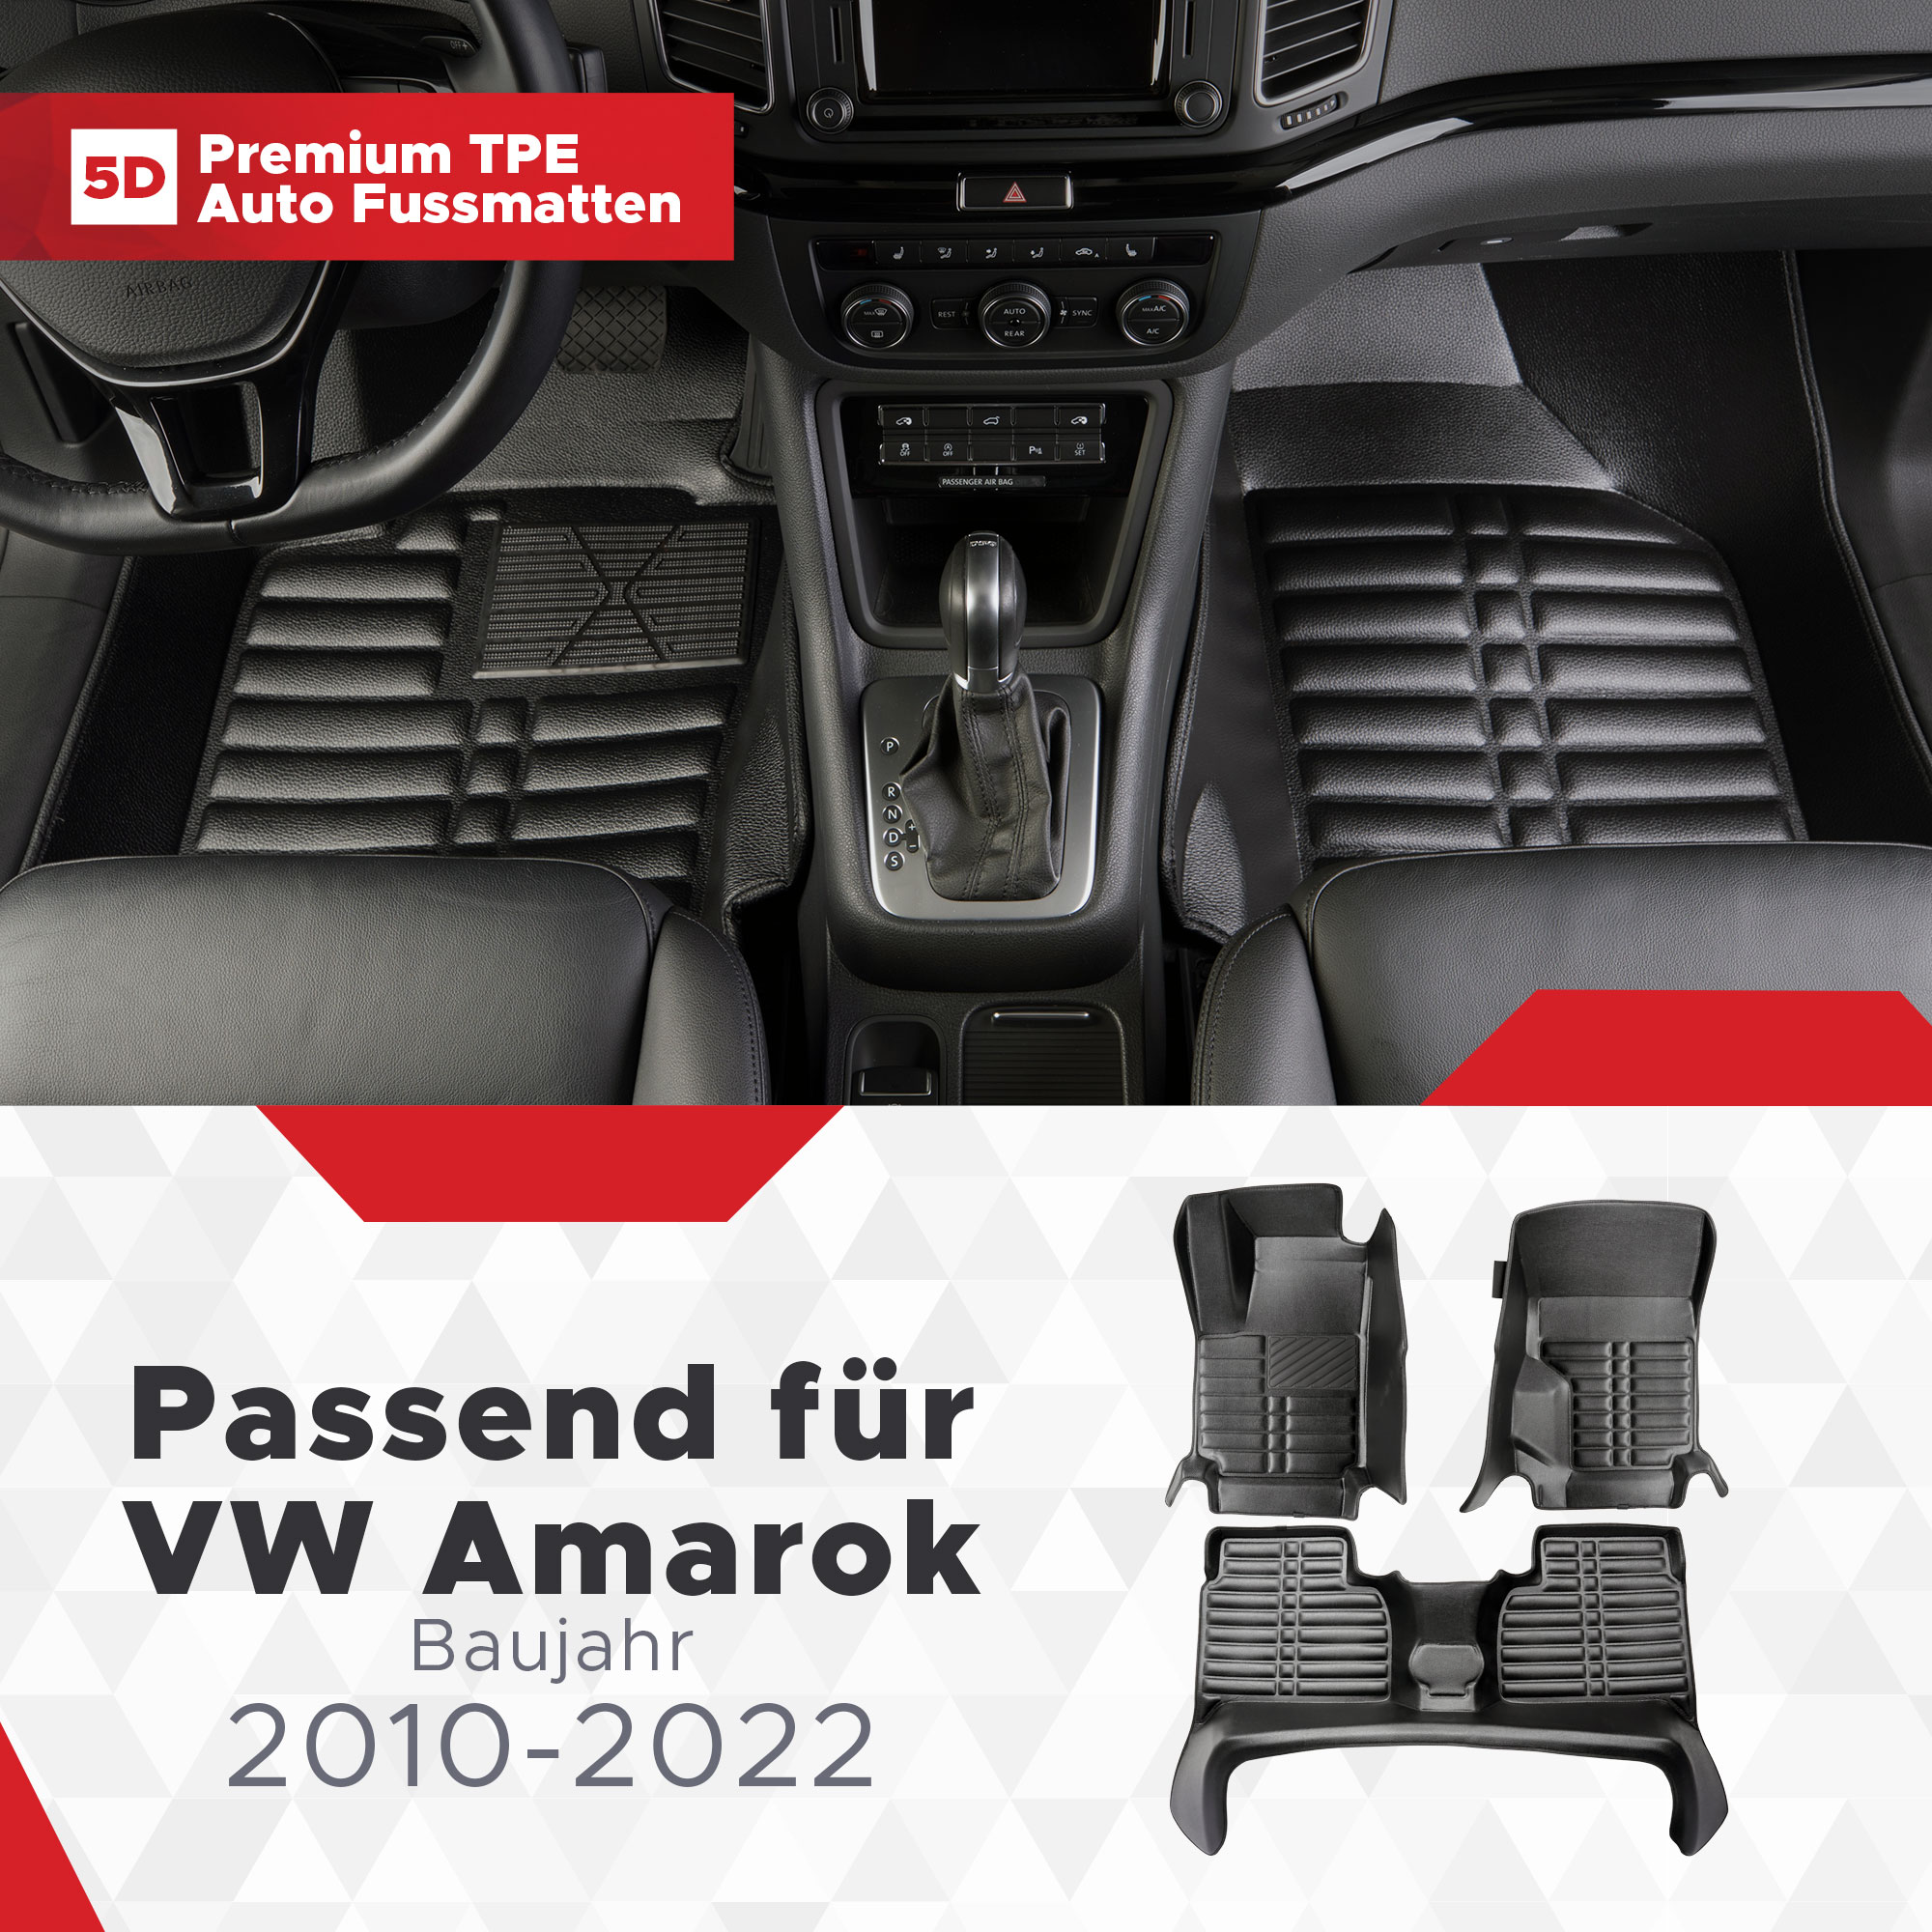 5D TPE VW Amarok Fußmatten ab 2010 - fussmattenprofi